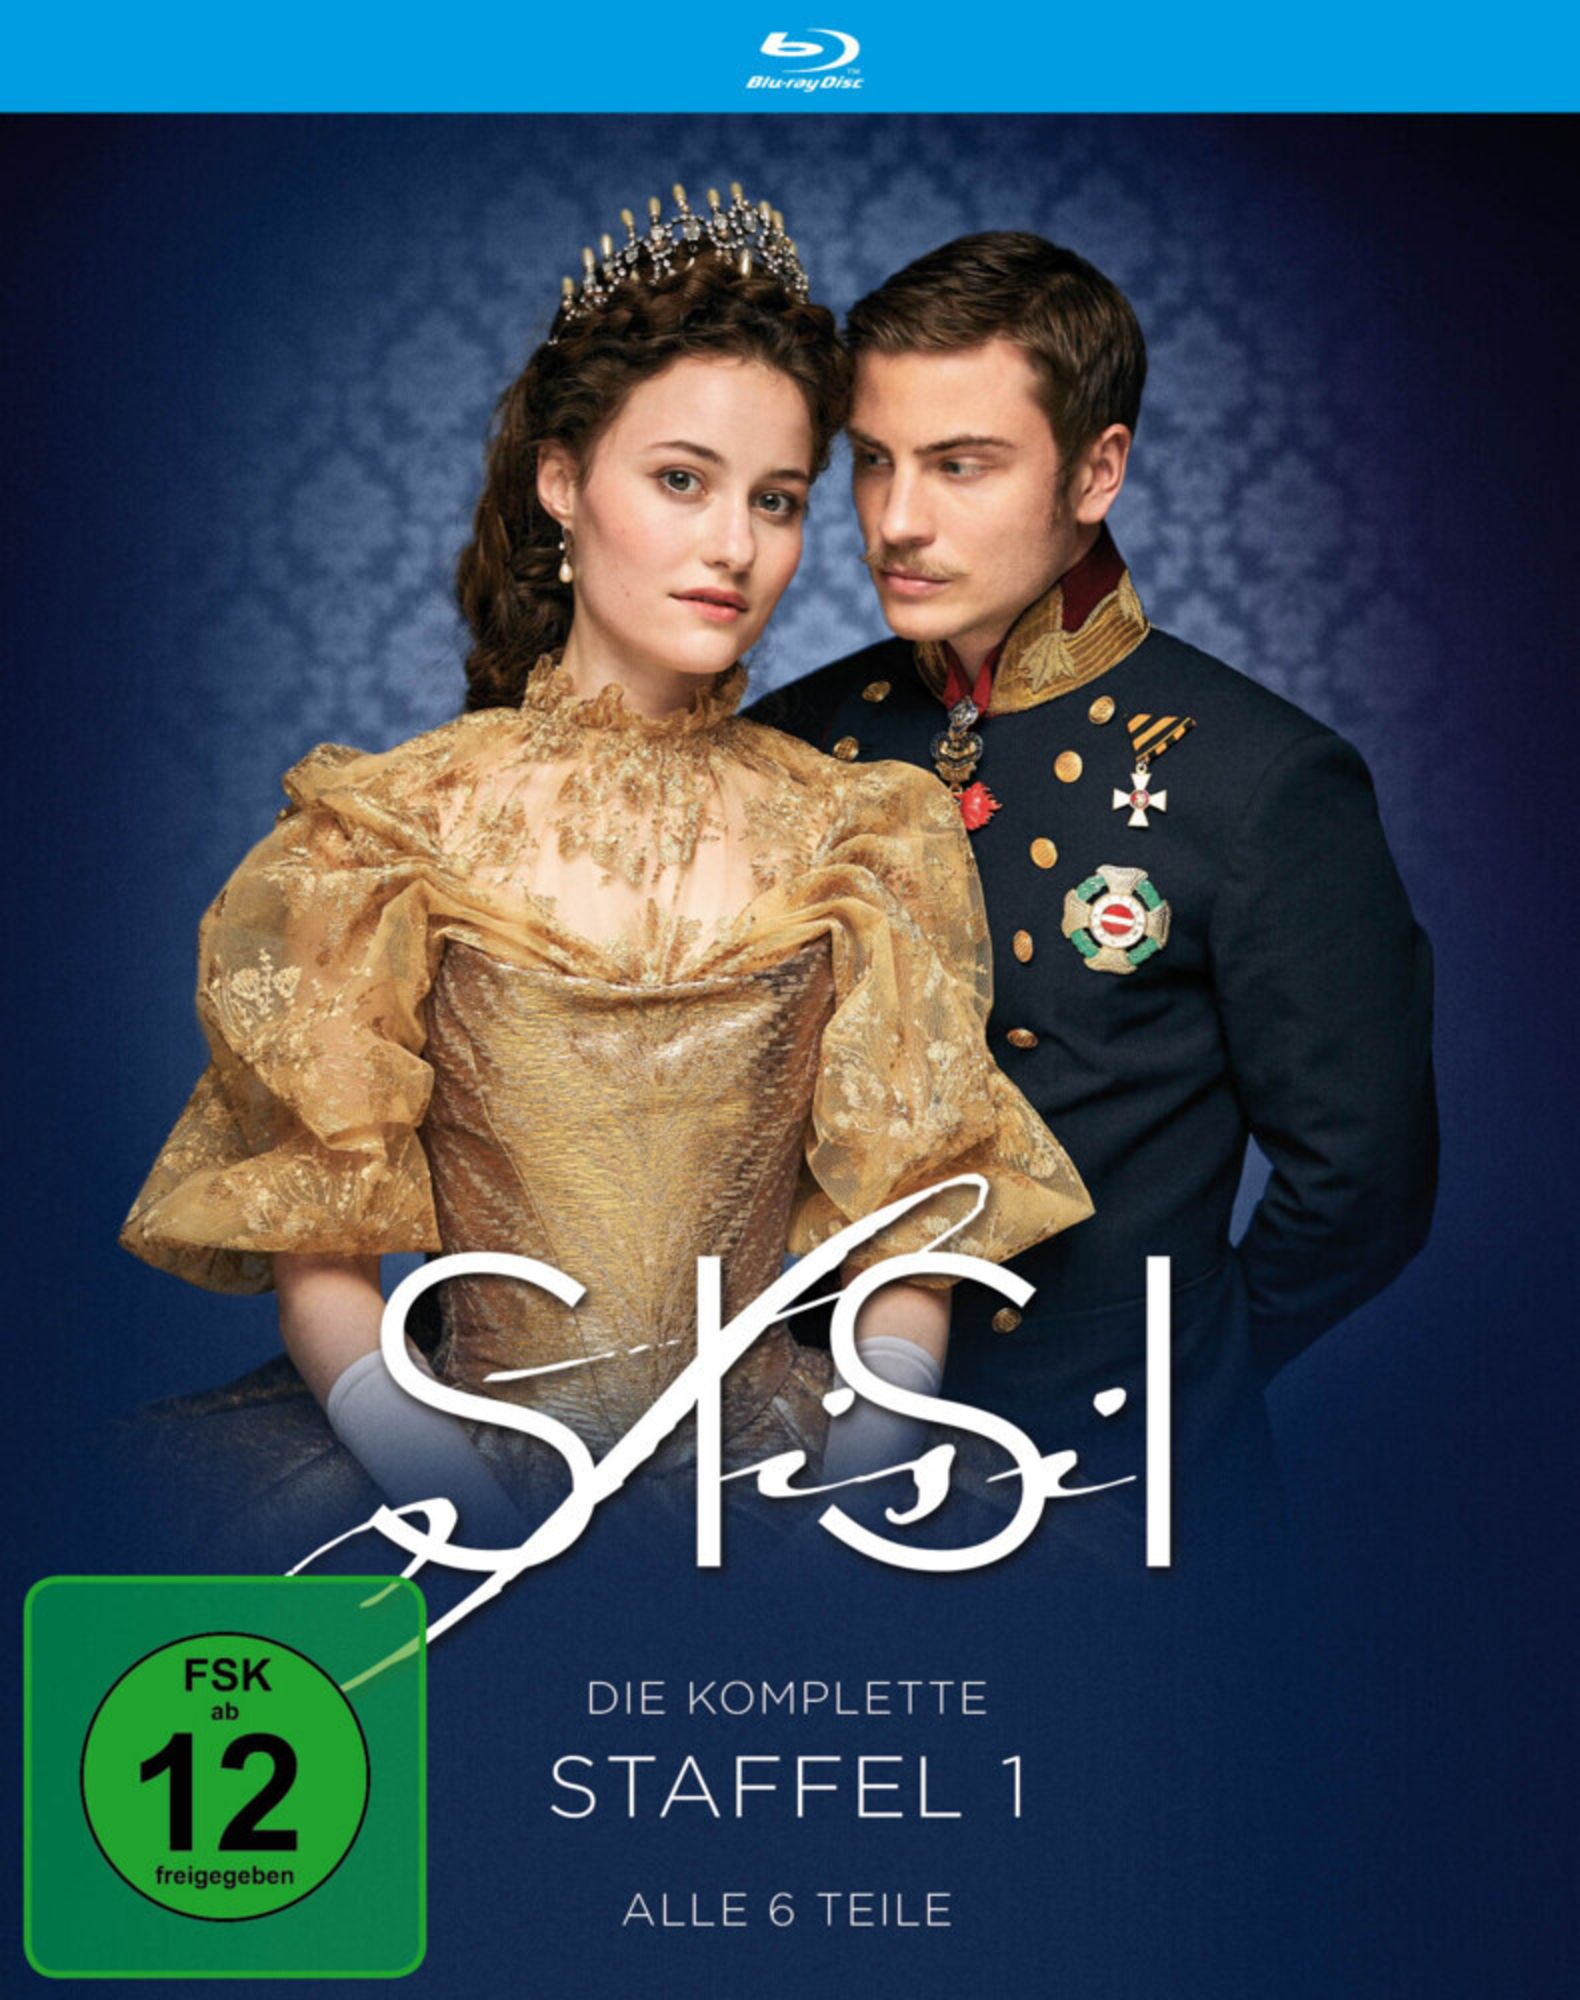 Sisi - Staffel 1 (alle 6 Teile) (Filmjuwelen) von Sven Bohse - Blu-ray